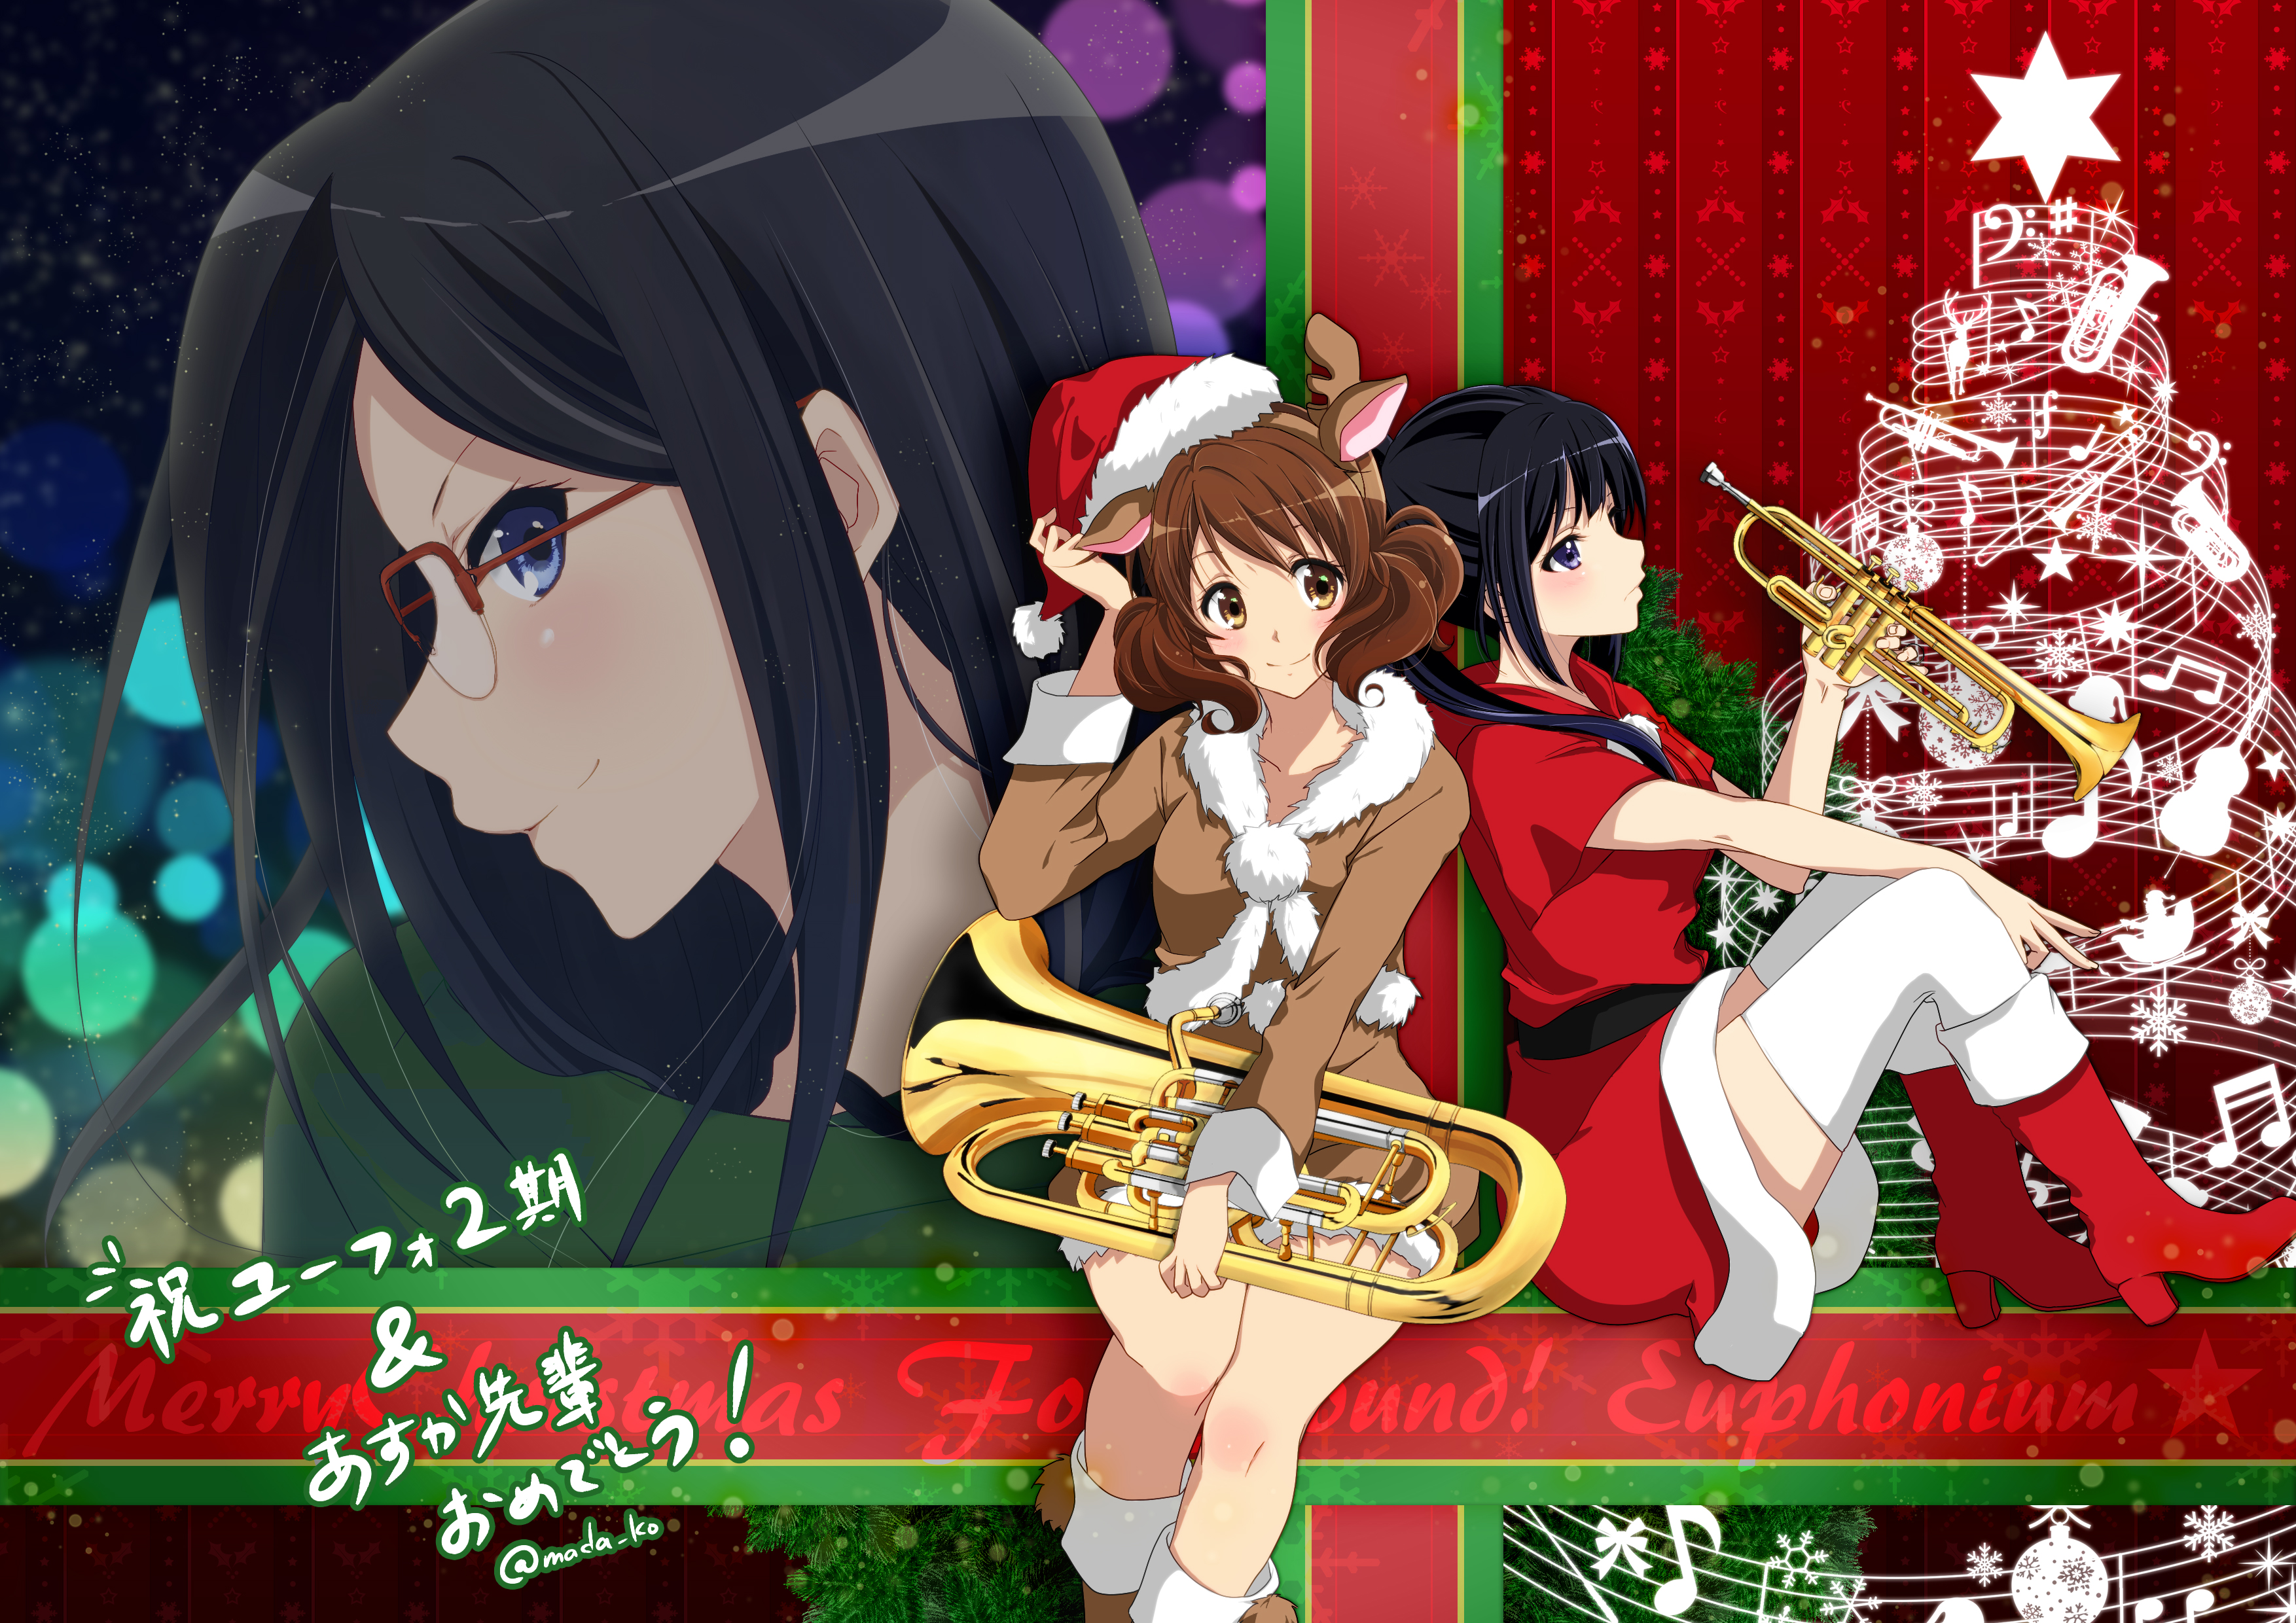 801040 Bild herunterladen animes, hibike! euphonium, asuka tanaka, weihnachten, feiertag, kumiko oumae, reina kousaka - Hintergrundbilder und Bildschirmschoner kostenlos